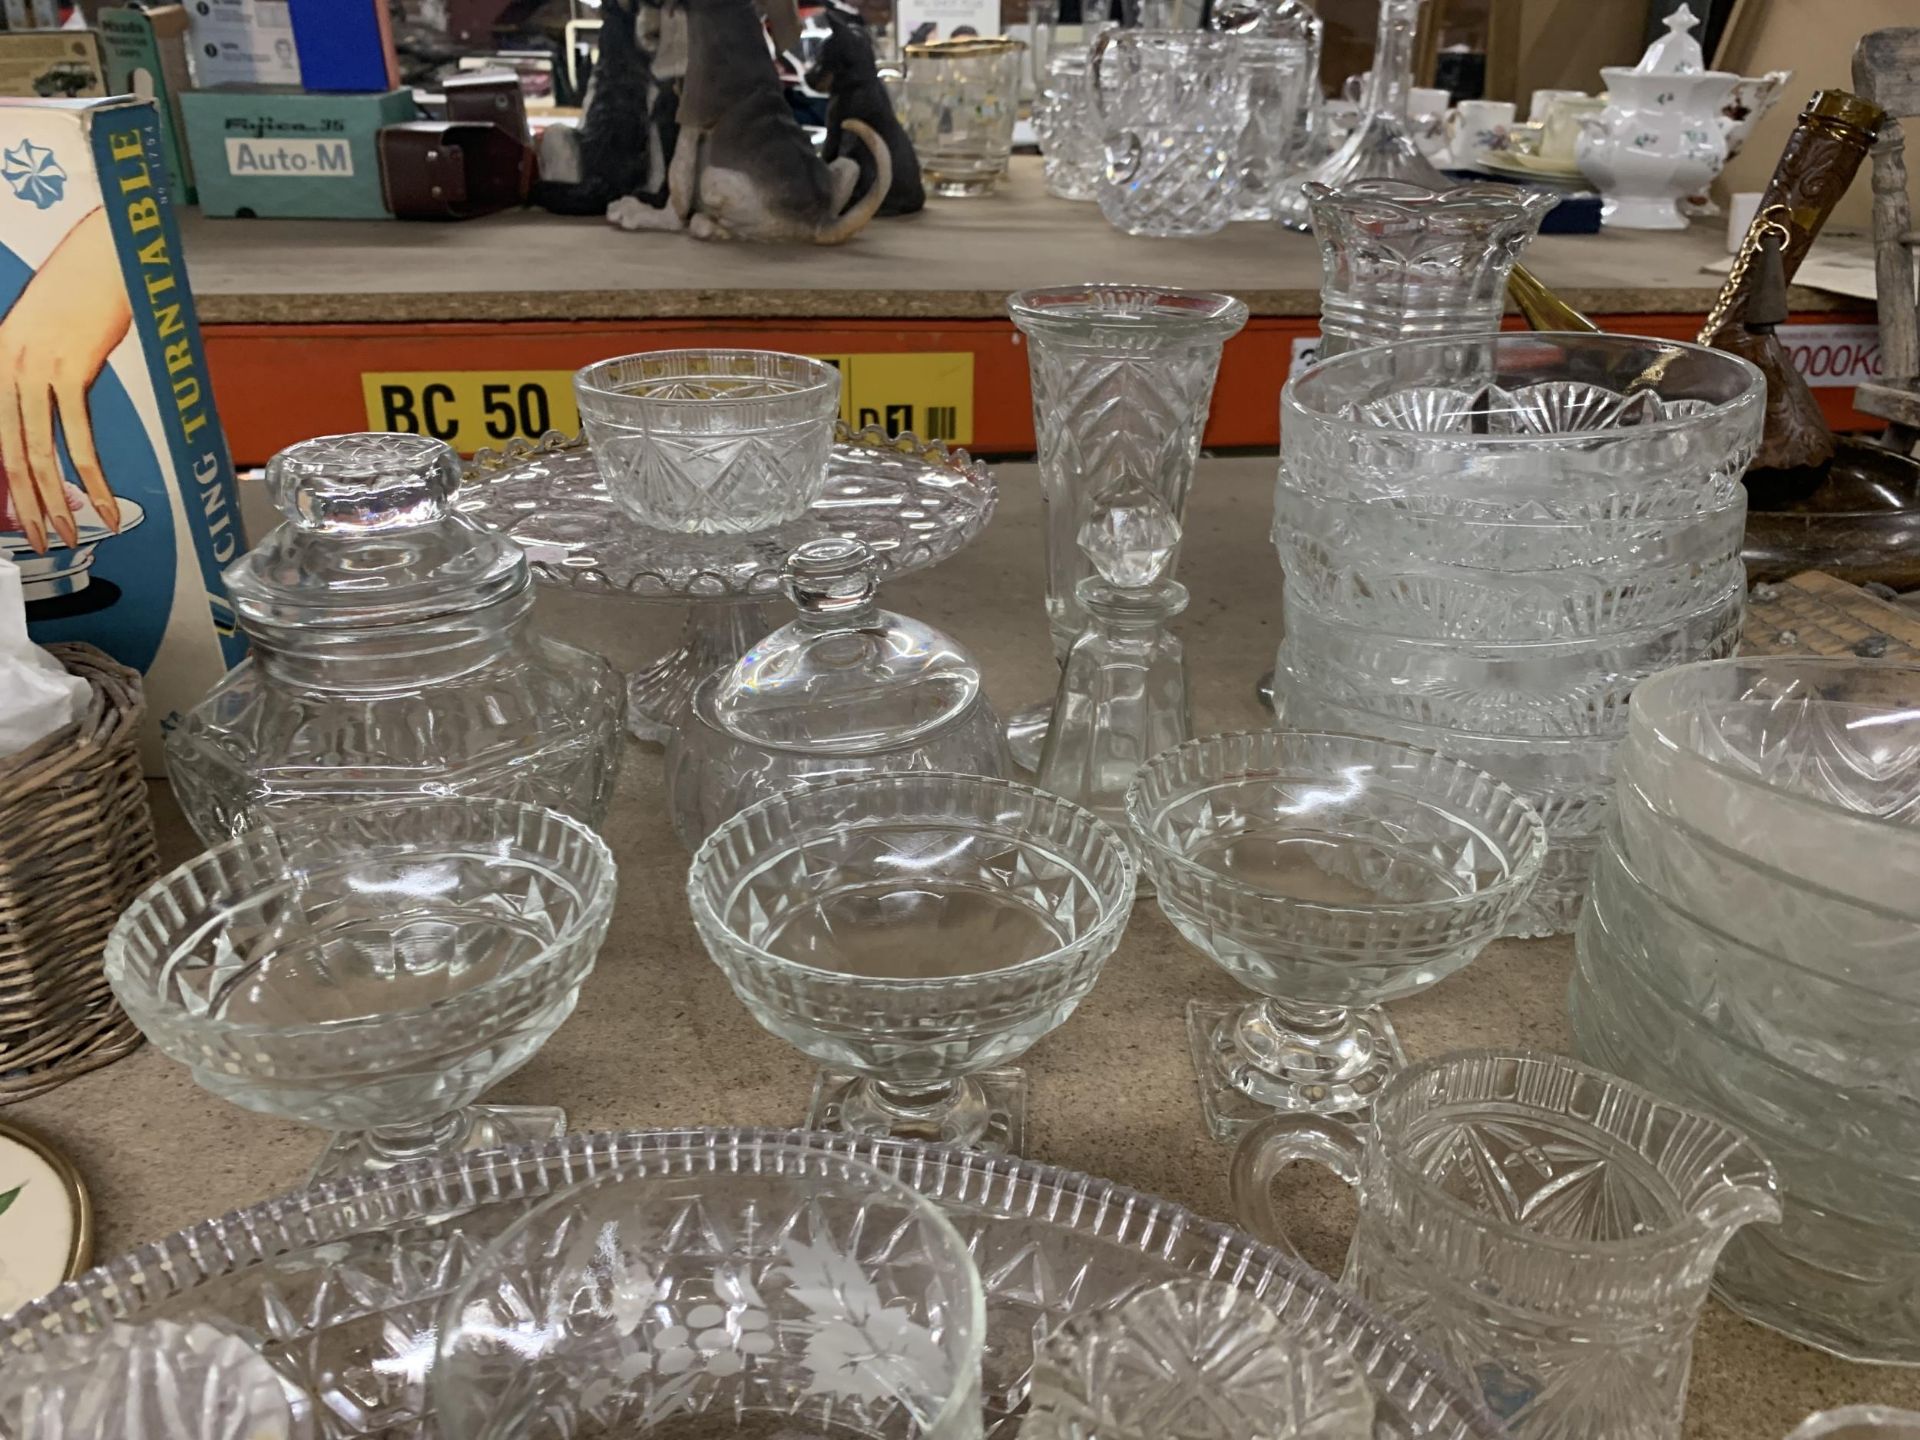 A LARGE QUANTITY OF GLASSWARE TO INCLUDE VASES, BOWLS, JUGS, ETC - Bild 3 aus 3